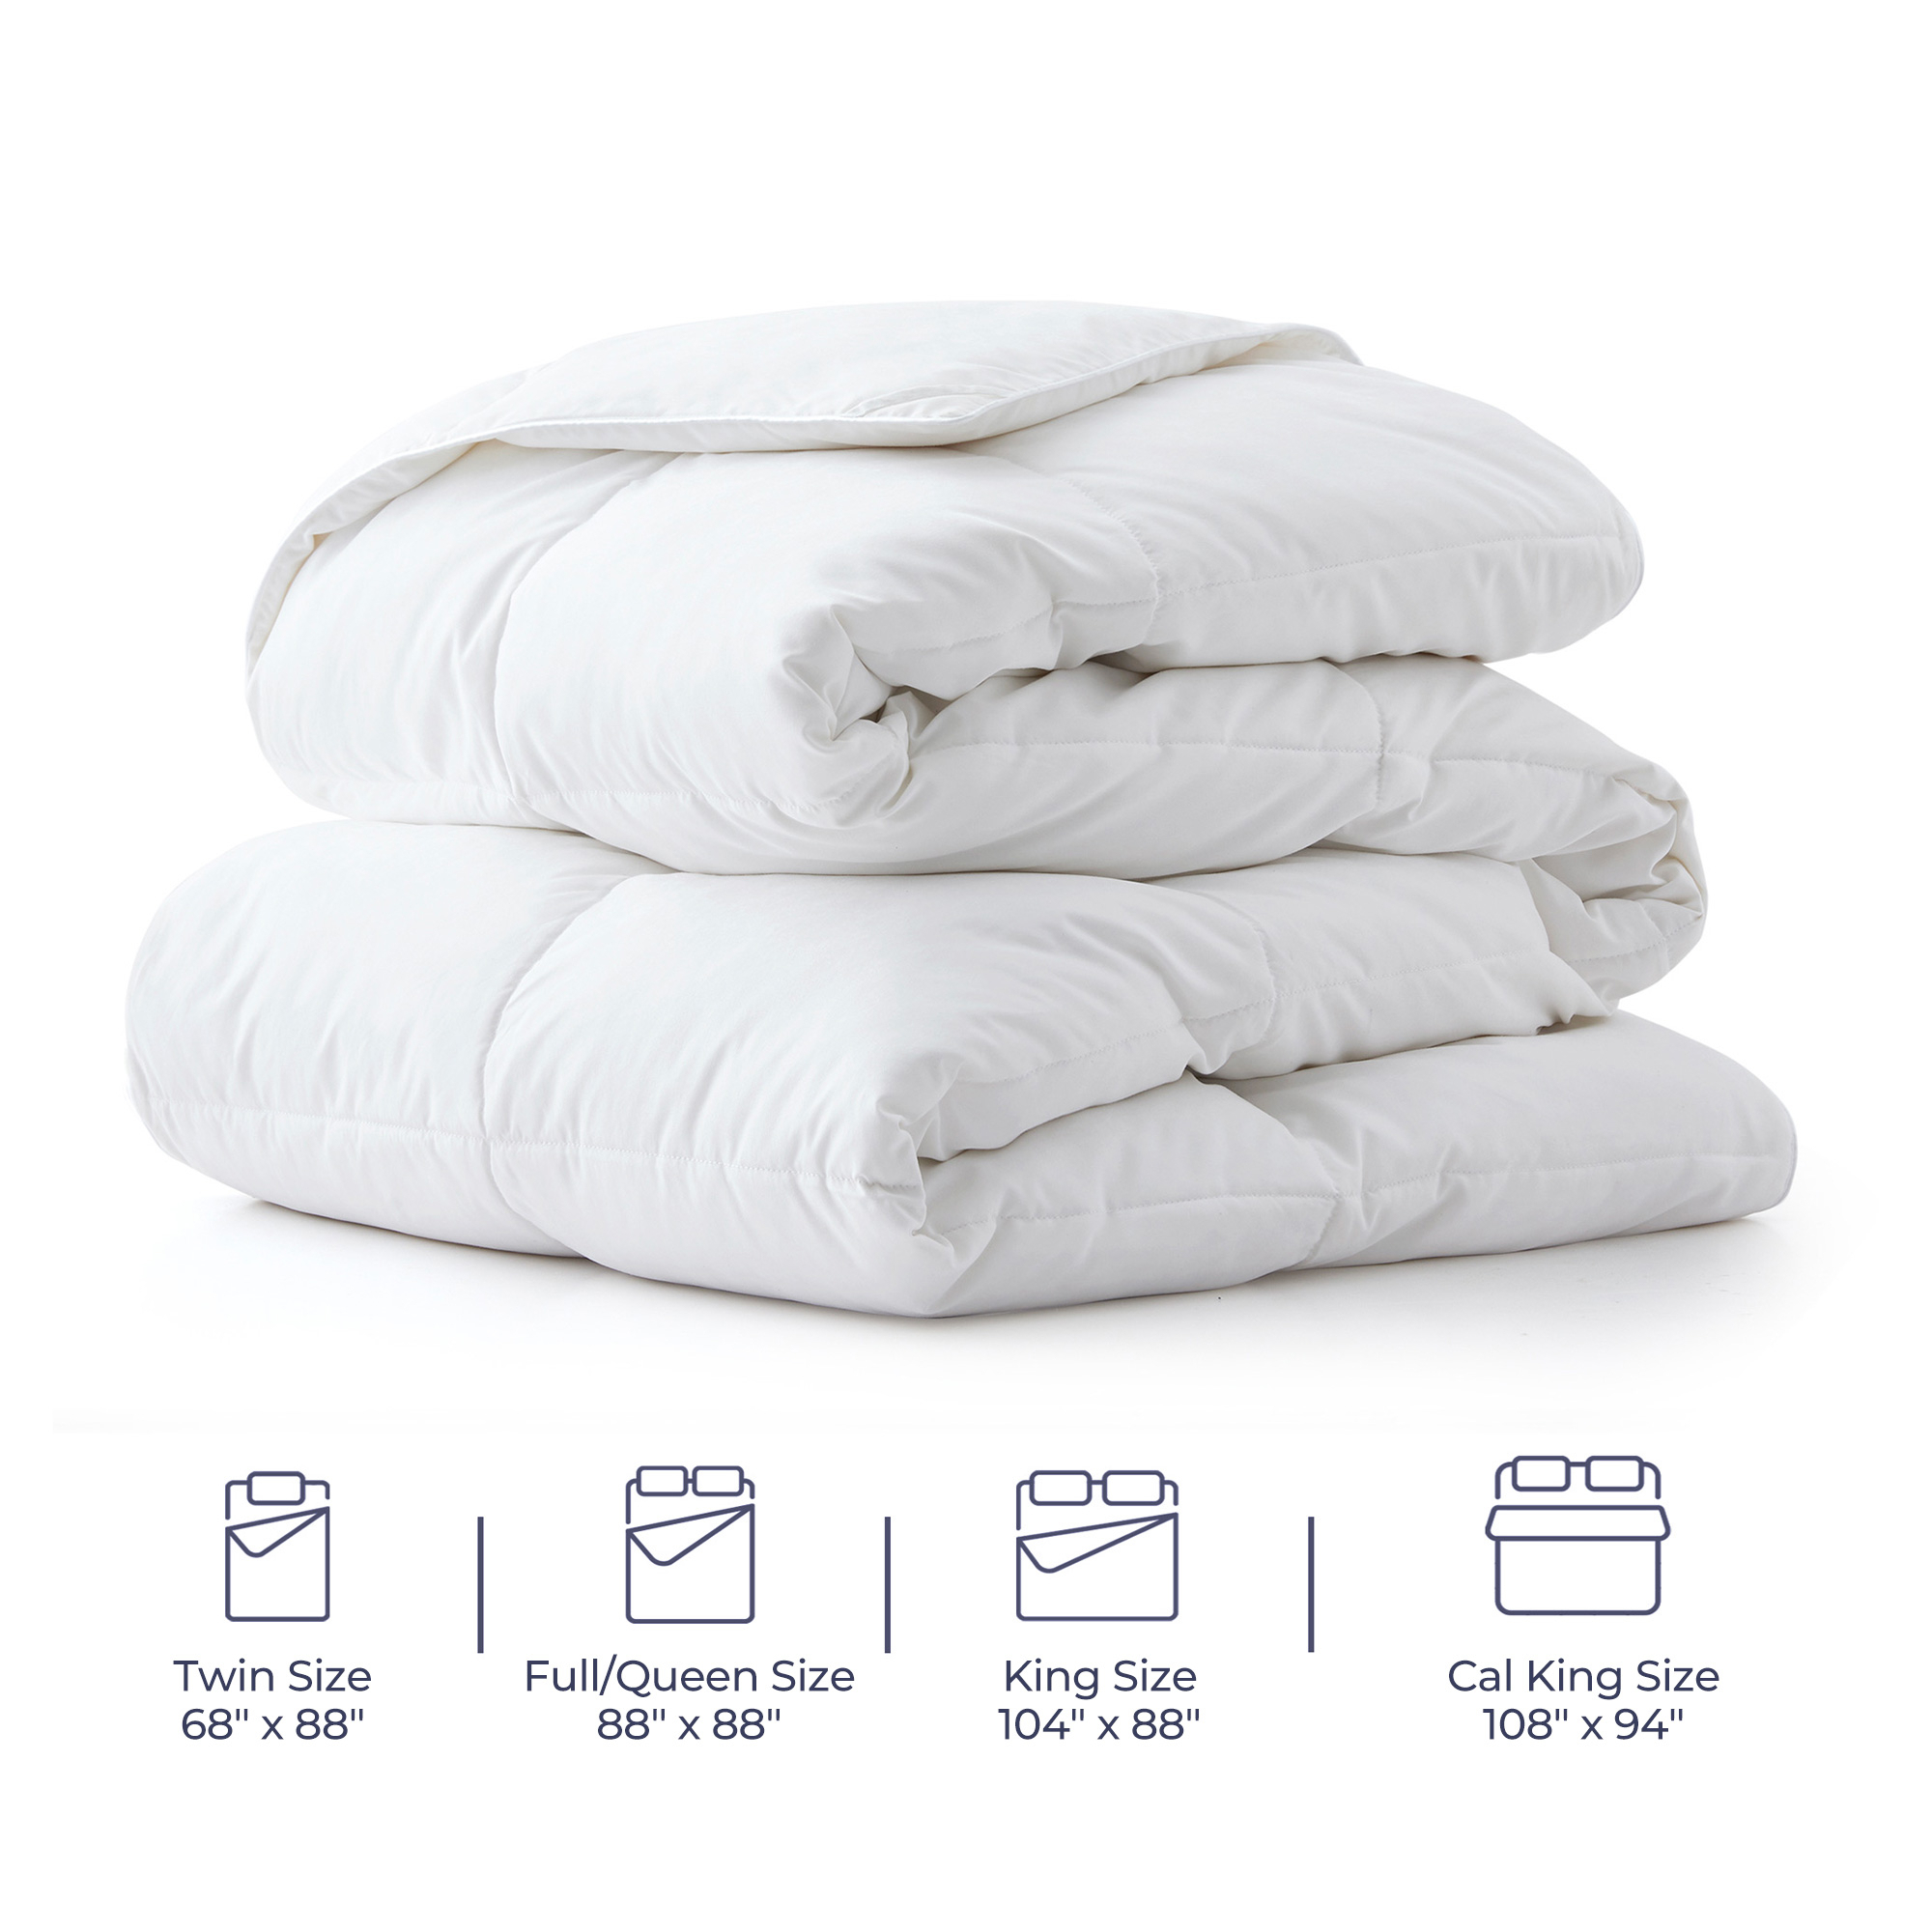 All Seasons White Goose Feather Comforter - Luxurious And Versatile Duvet Insert - Full/Queen